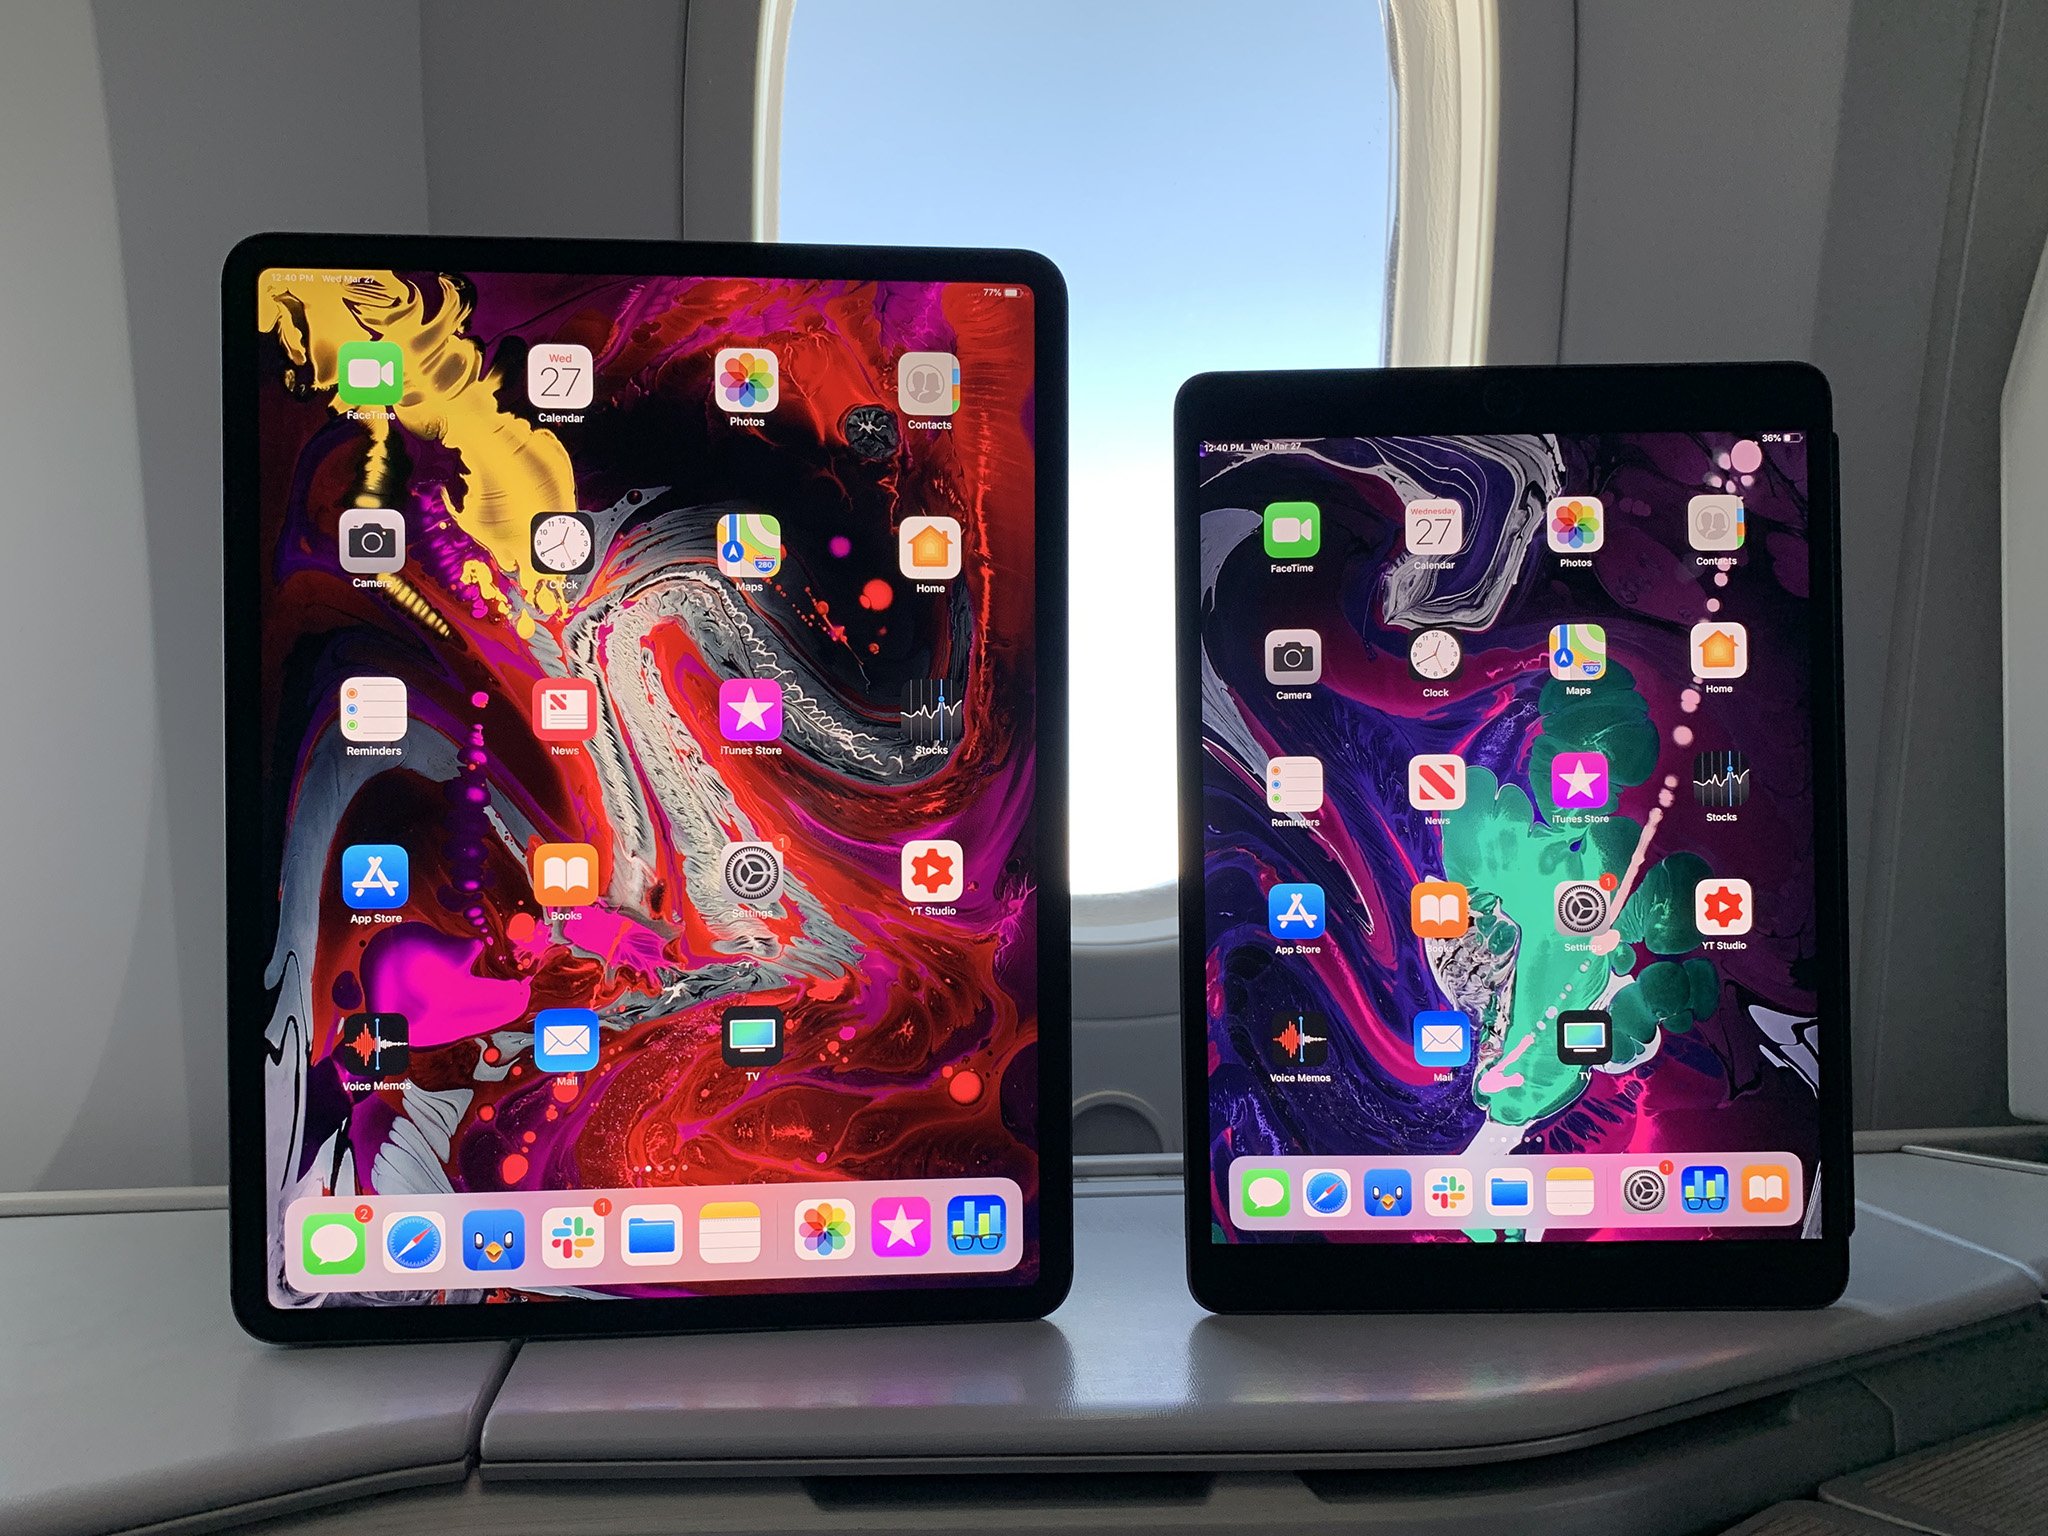 iPad Pro 3 (11-inch edge-to-edge display) vs. iPad Air 3 (10.5-inch display with bigger top and bottom bezels.) 